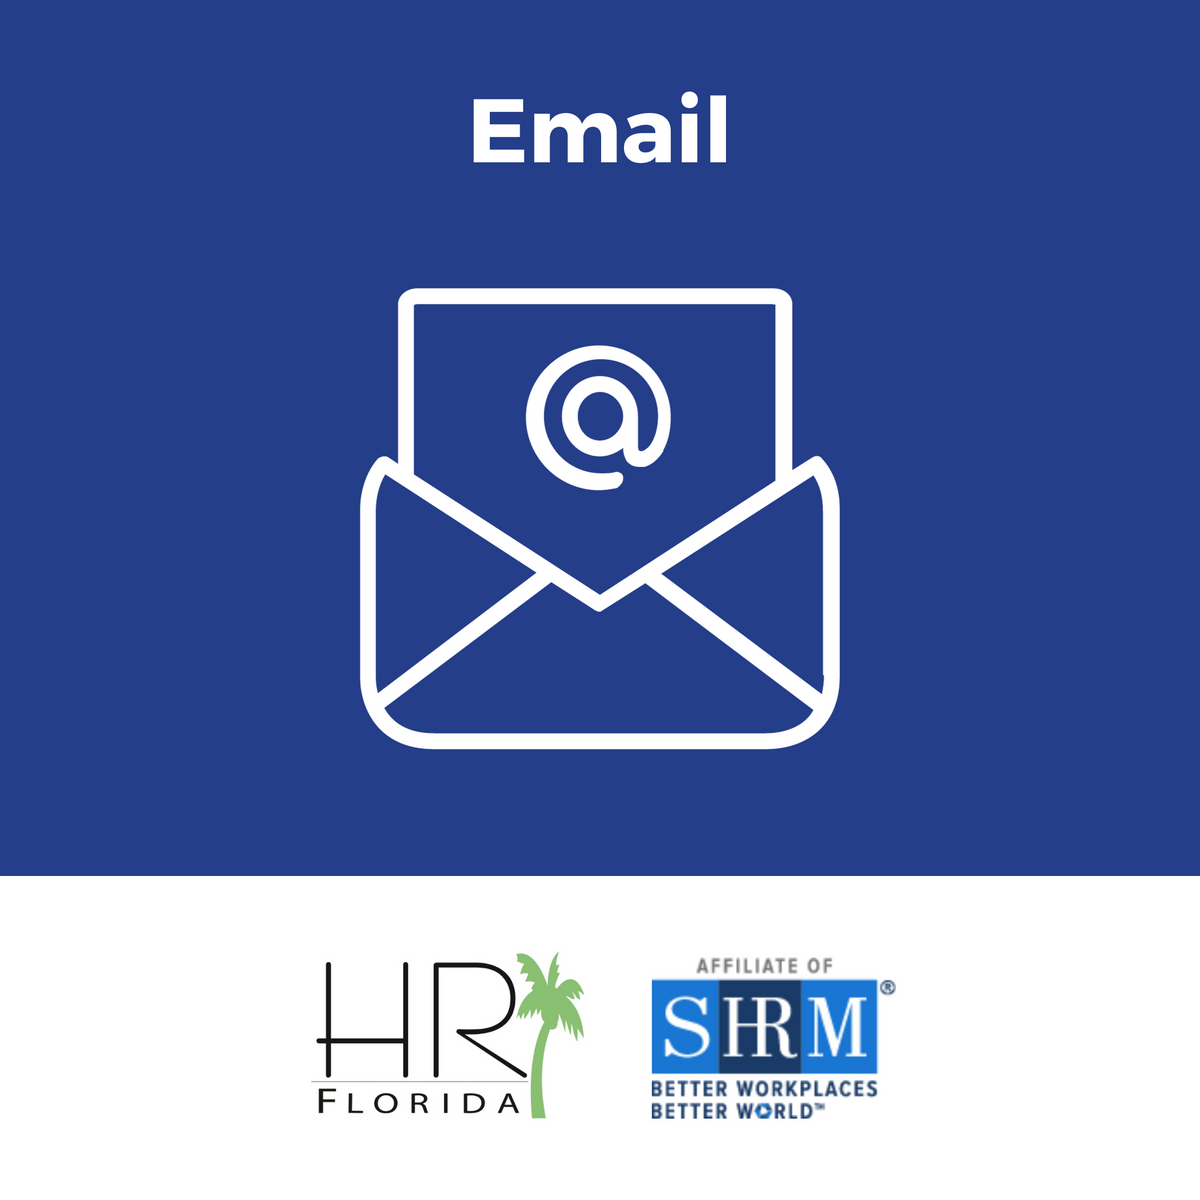 Florida SHRM Email Campaign